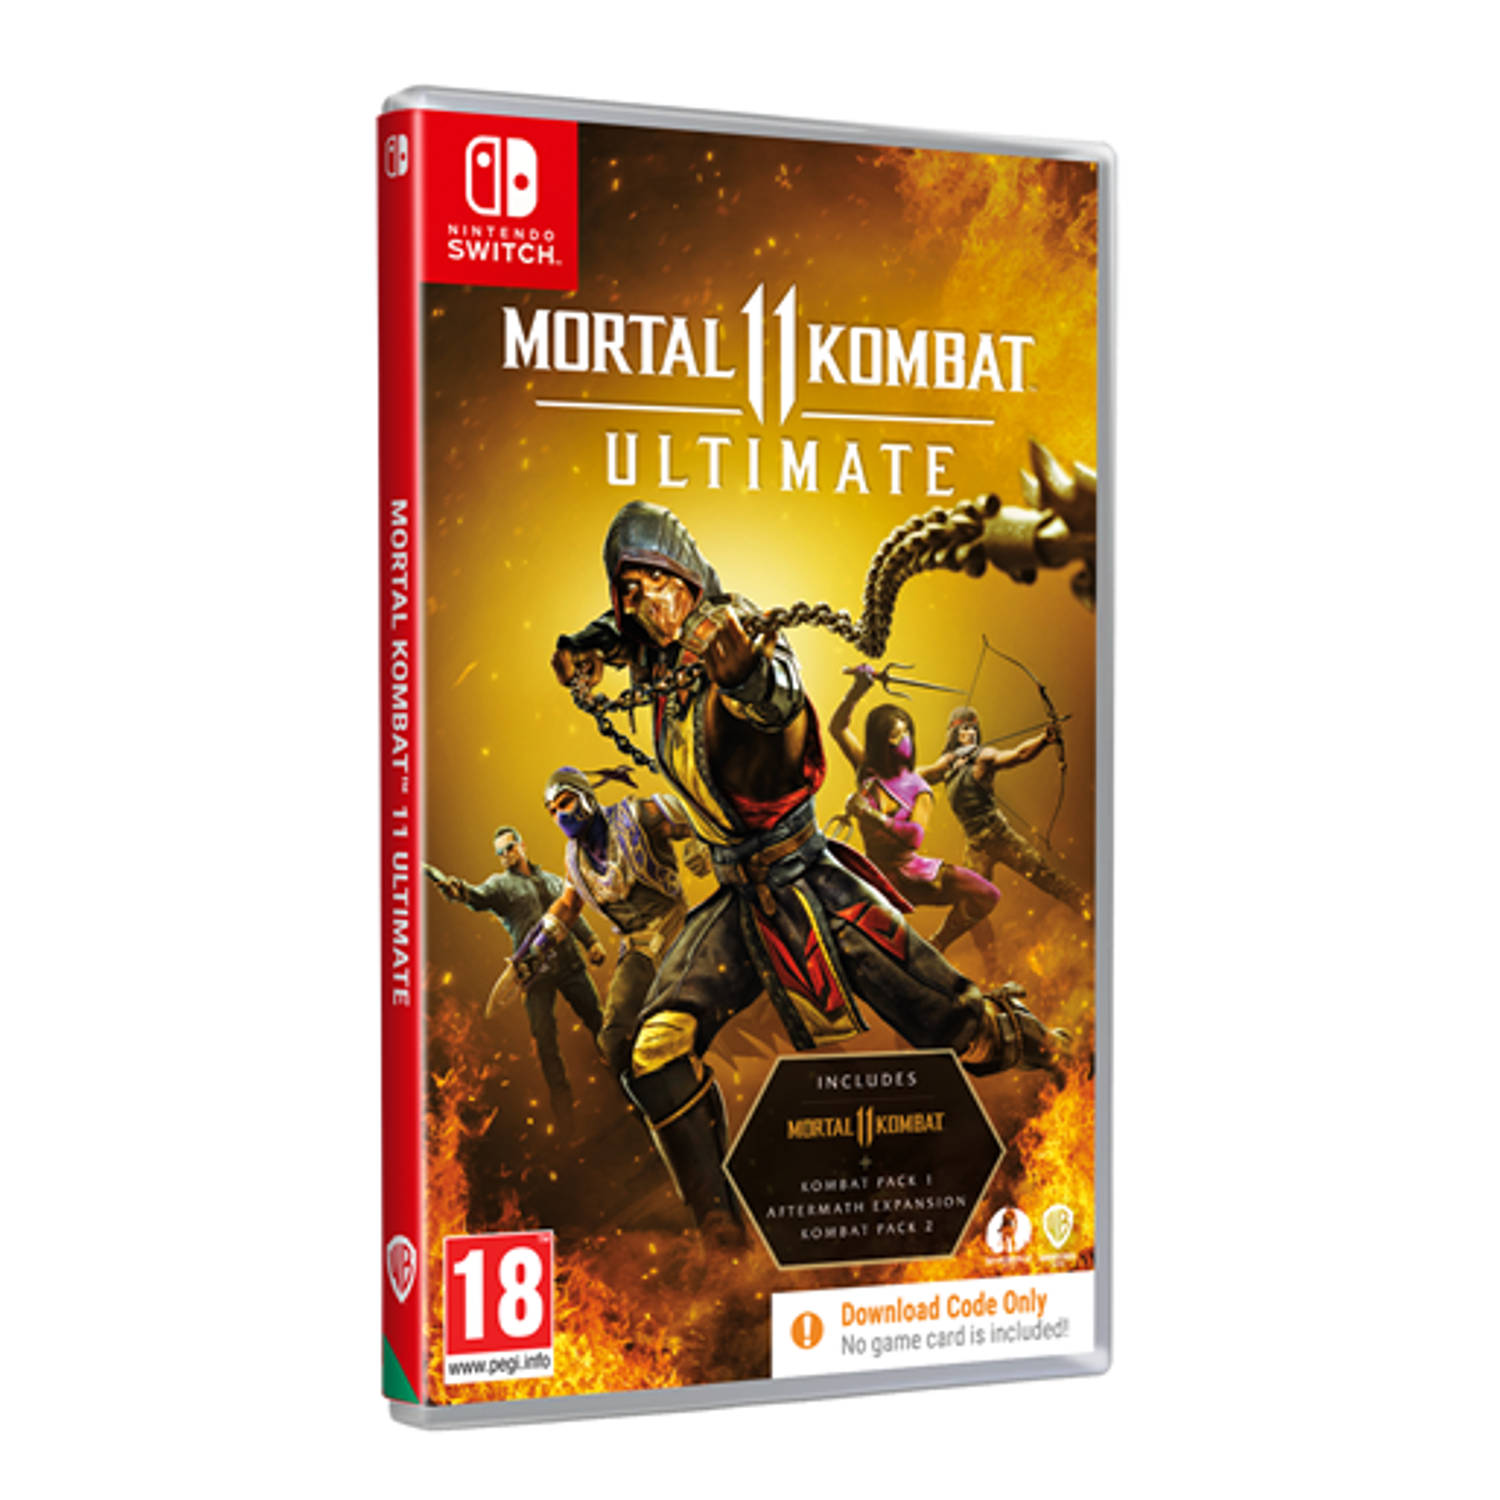 Mortal kombat 11 Ultimate, (Nintendo Switch).